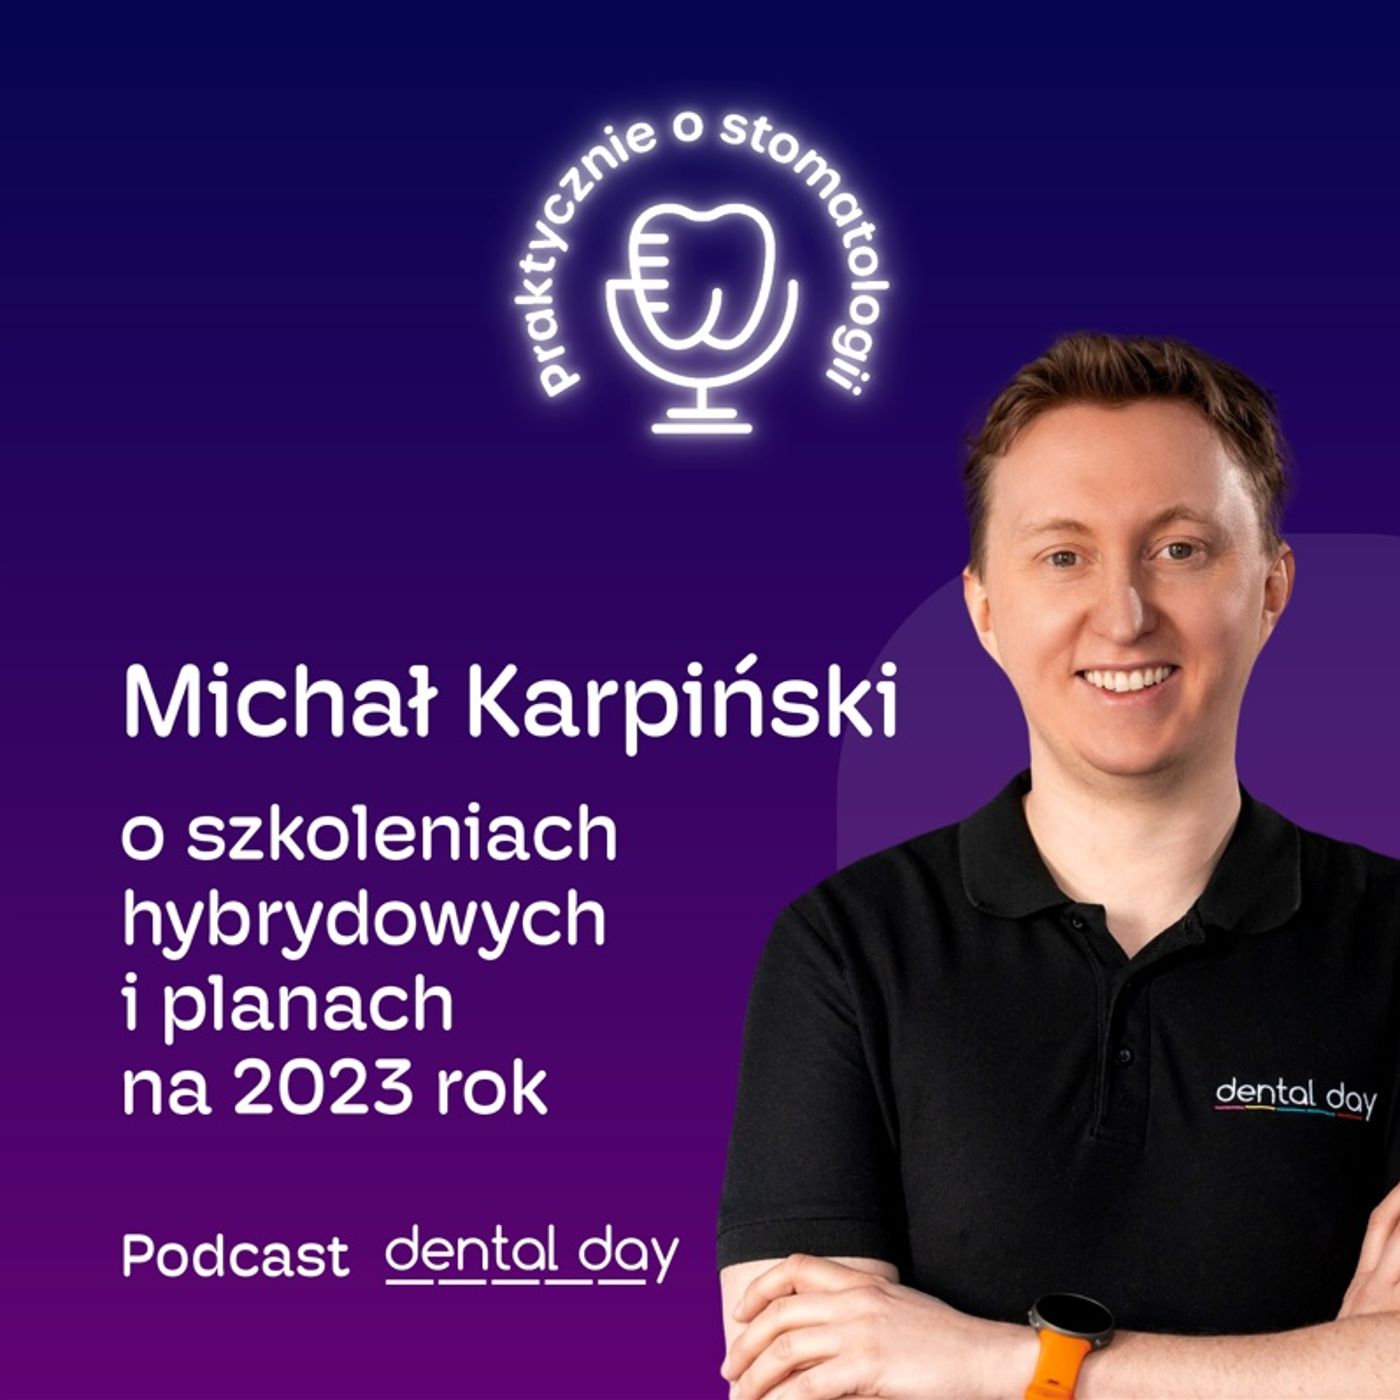 Michał Karpiński: szkolenia hybrydowe i plany na 2023 r.